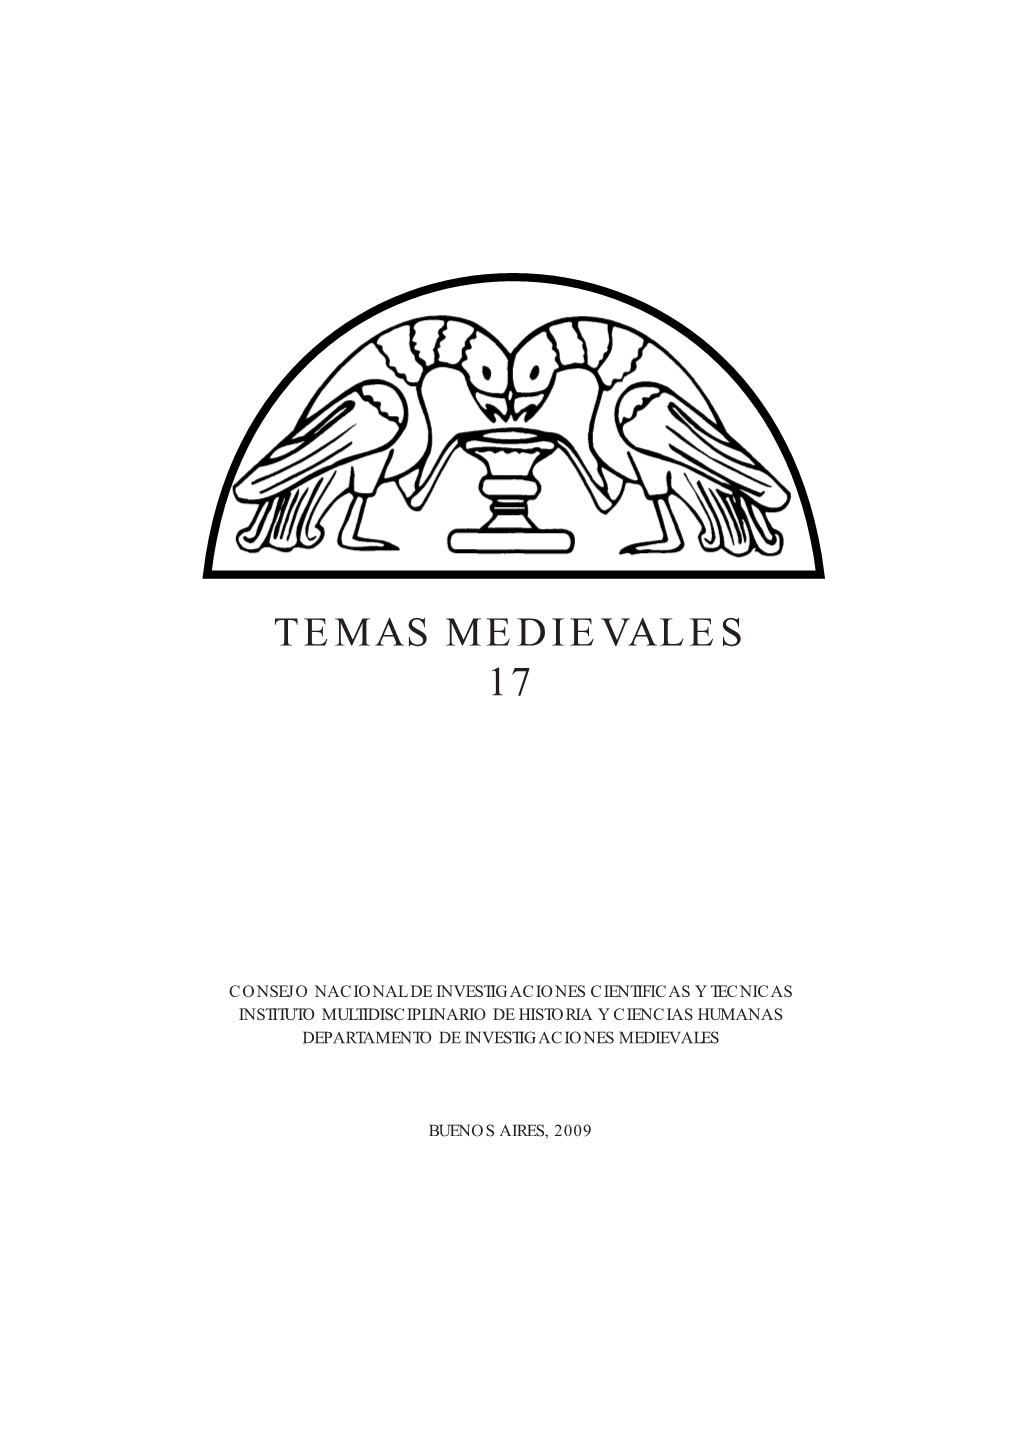 Temas Medievales 17